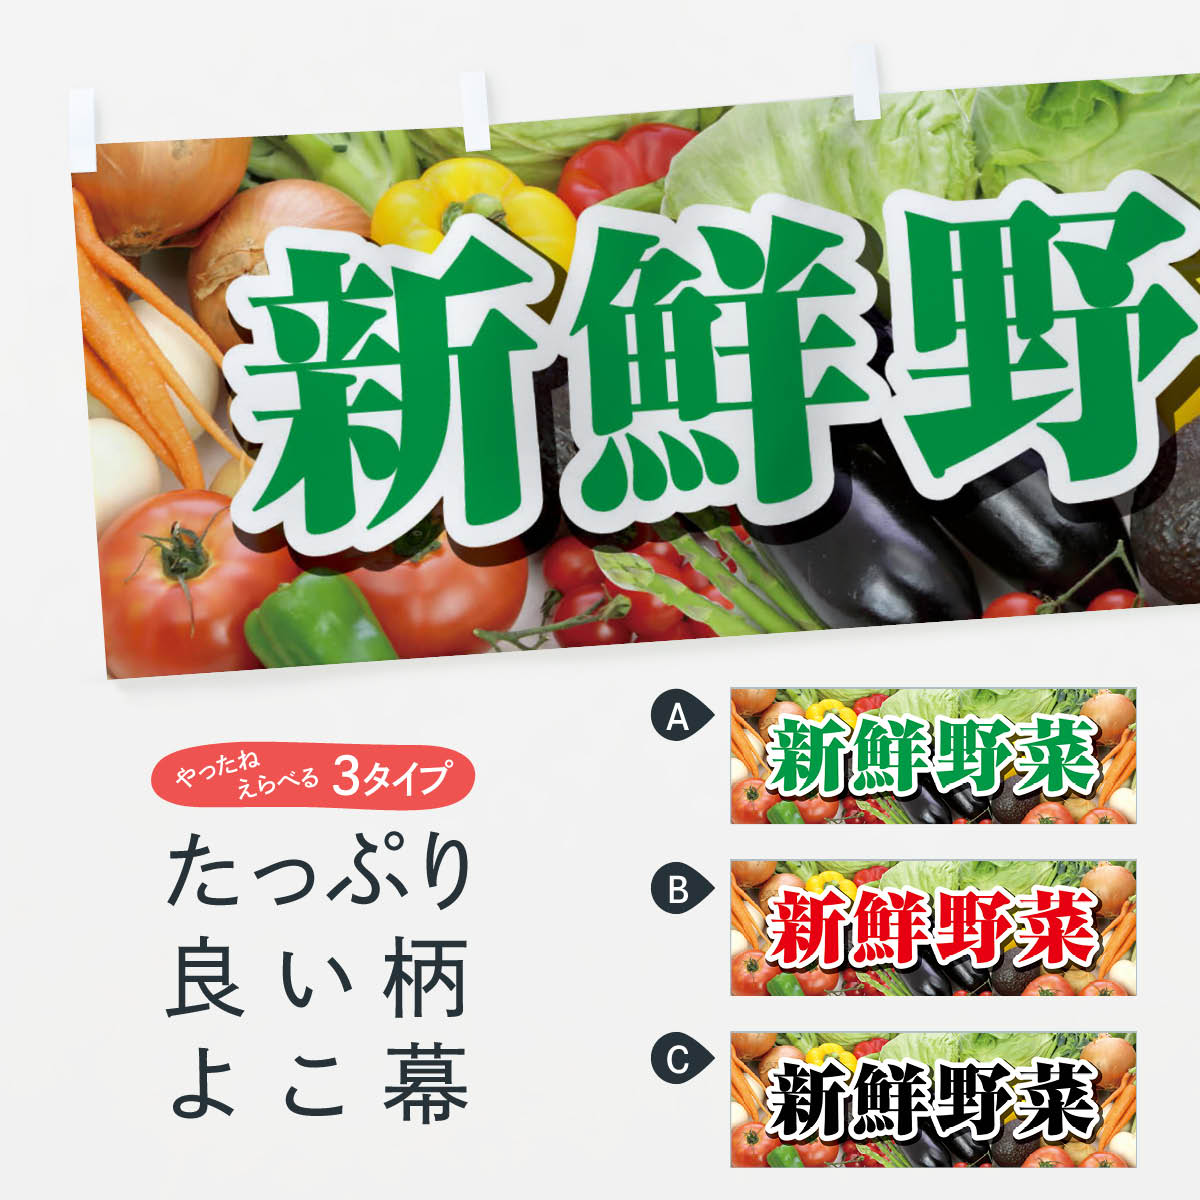 【ネコポス送料360】 横幕 新鮮野菜 1NF2 新鮮野菜・直売